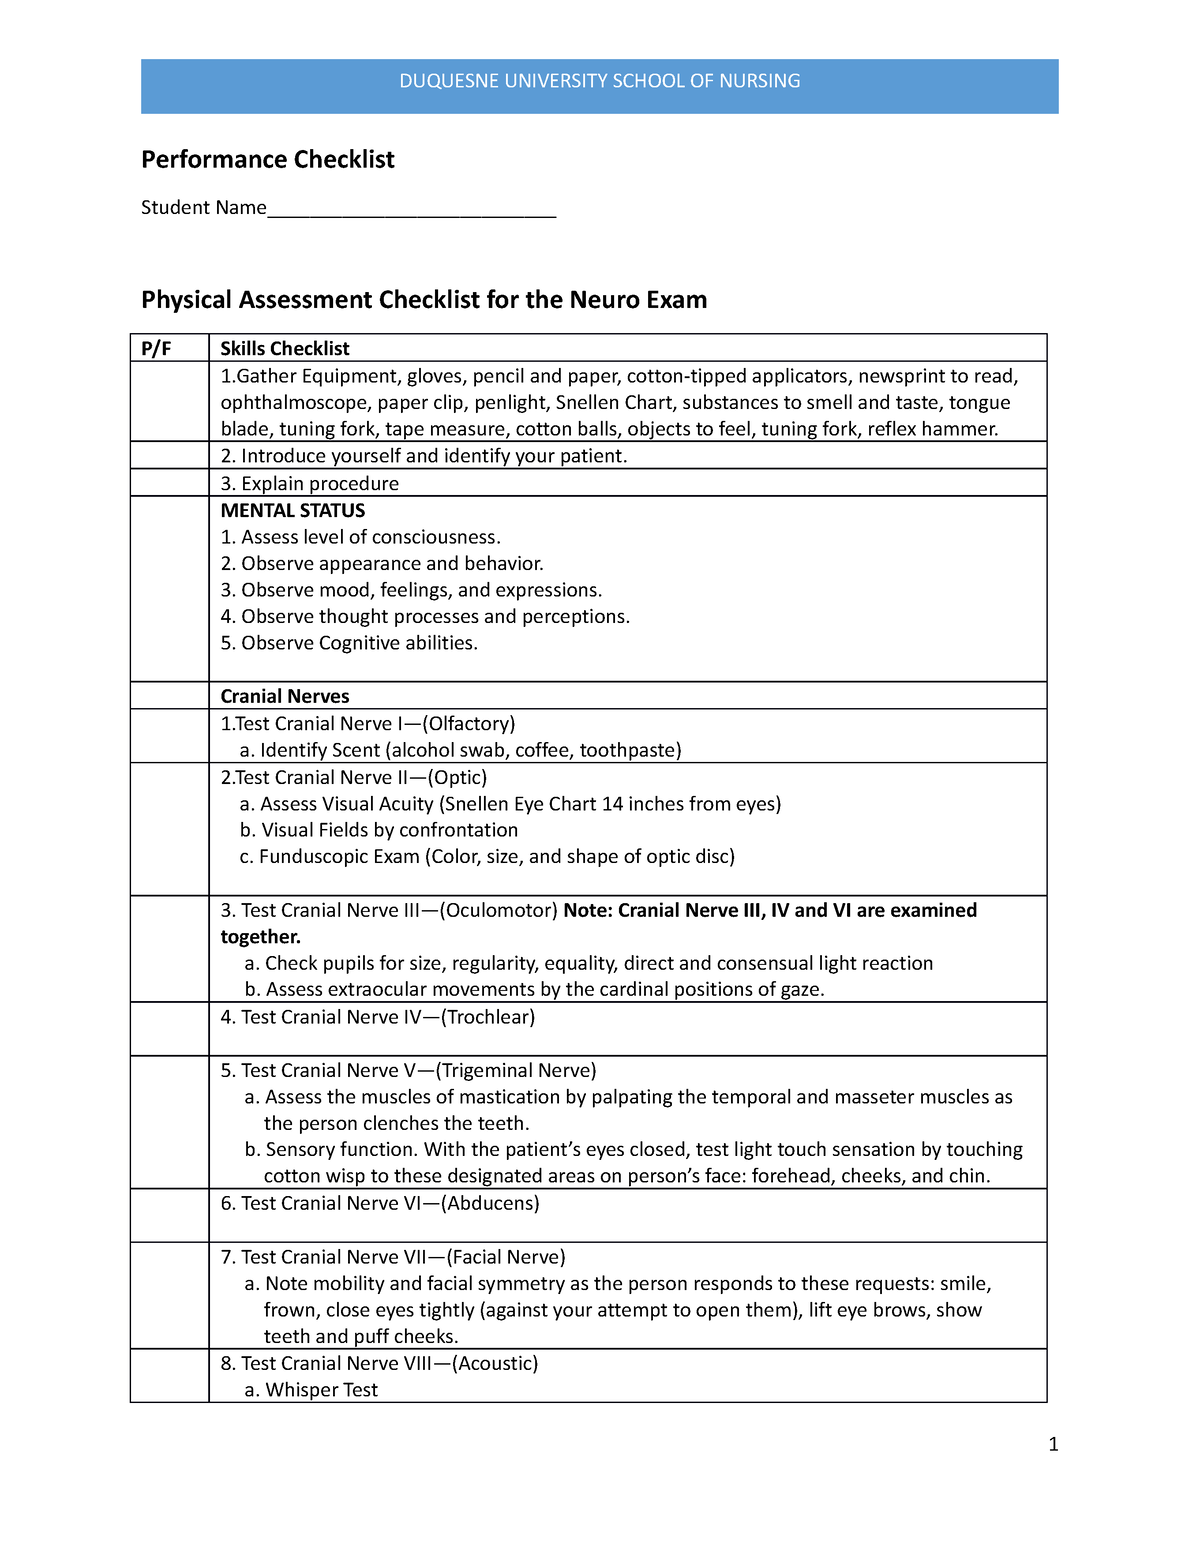 Neuro Checklist - Performance Checklist Student Name ...